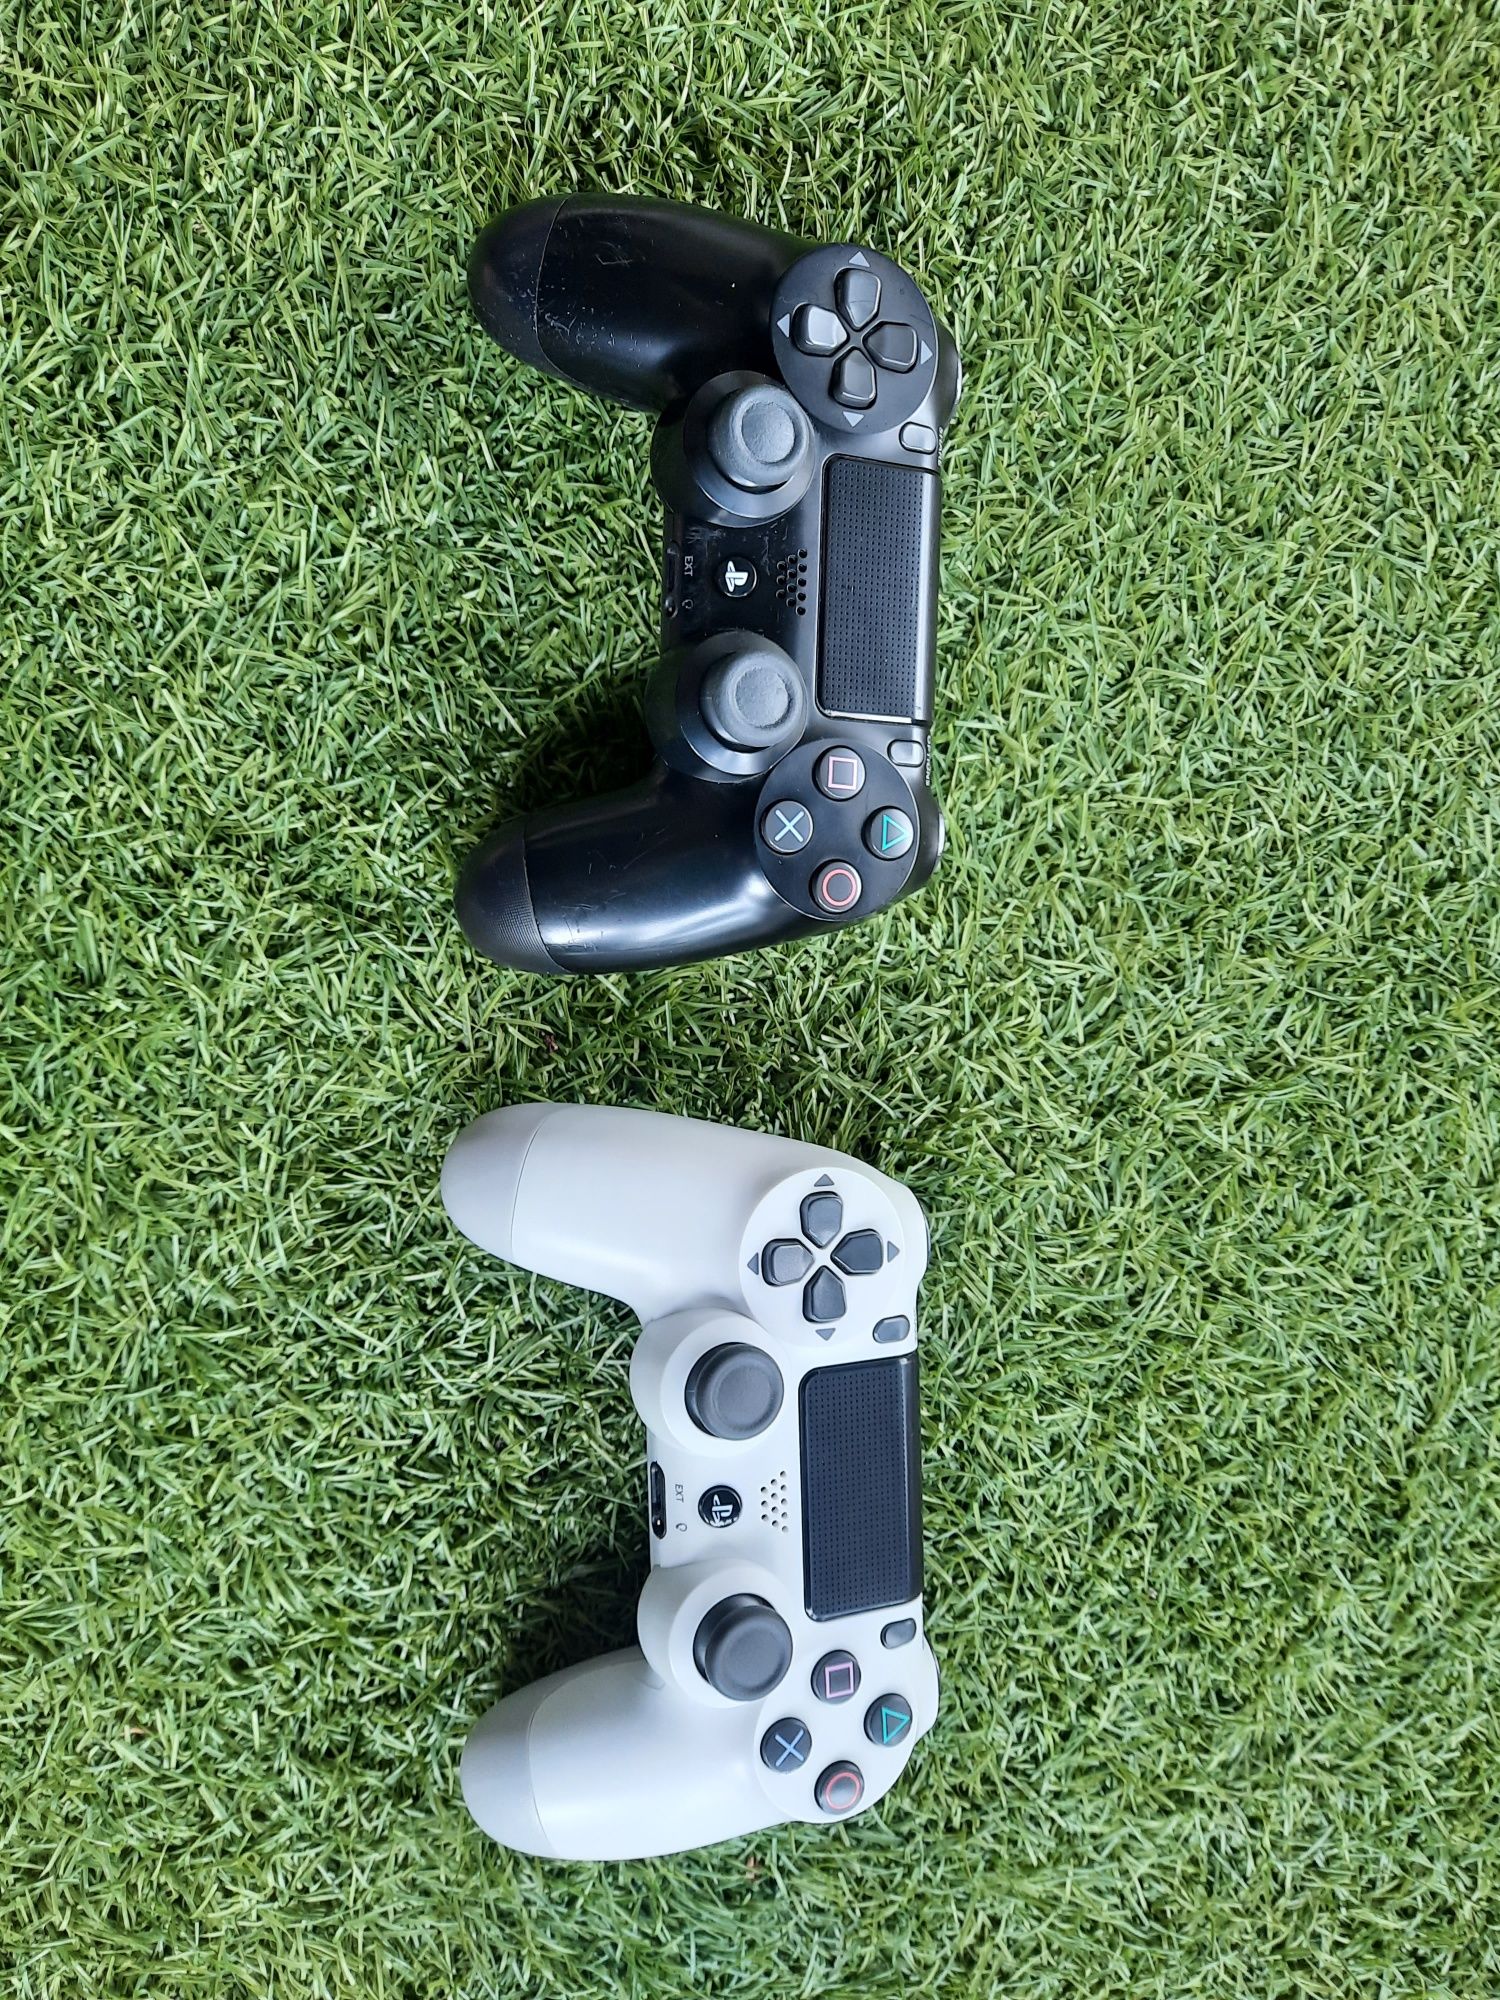 Consola Play Station 4 [PS4] slim cu două controlere